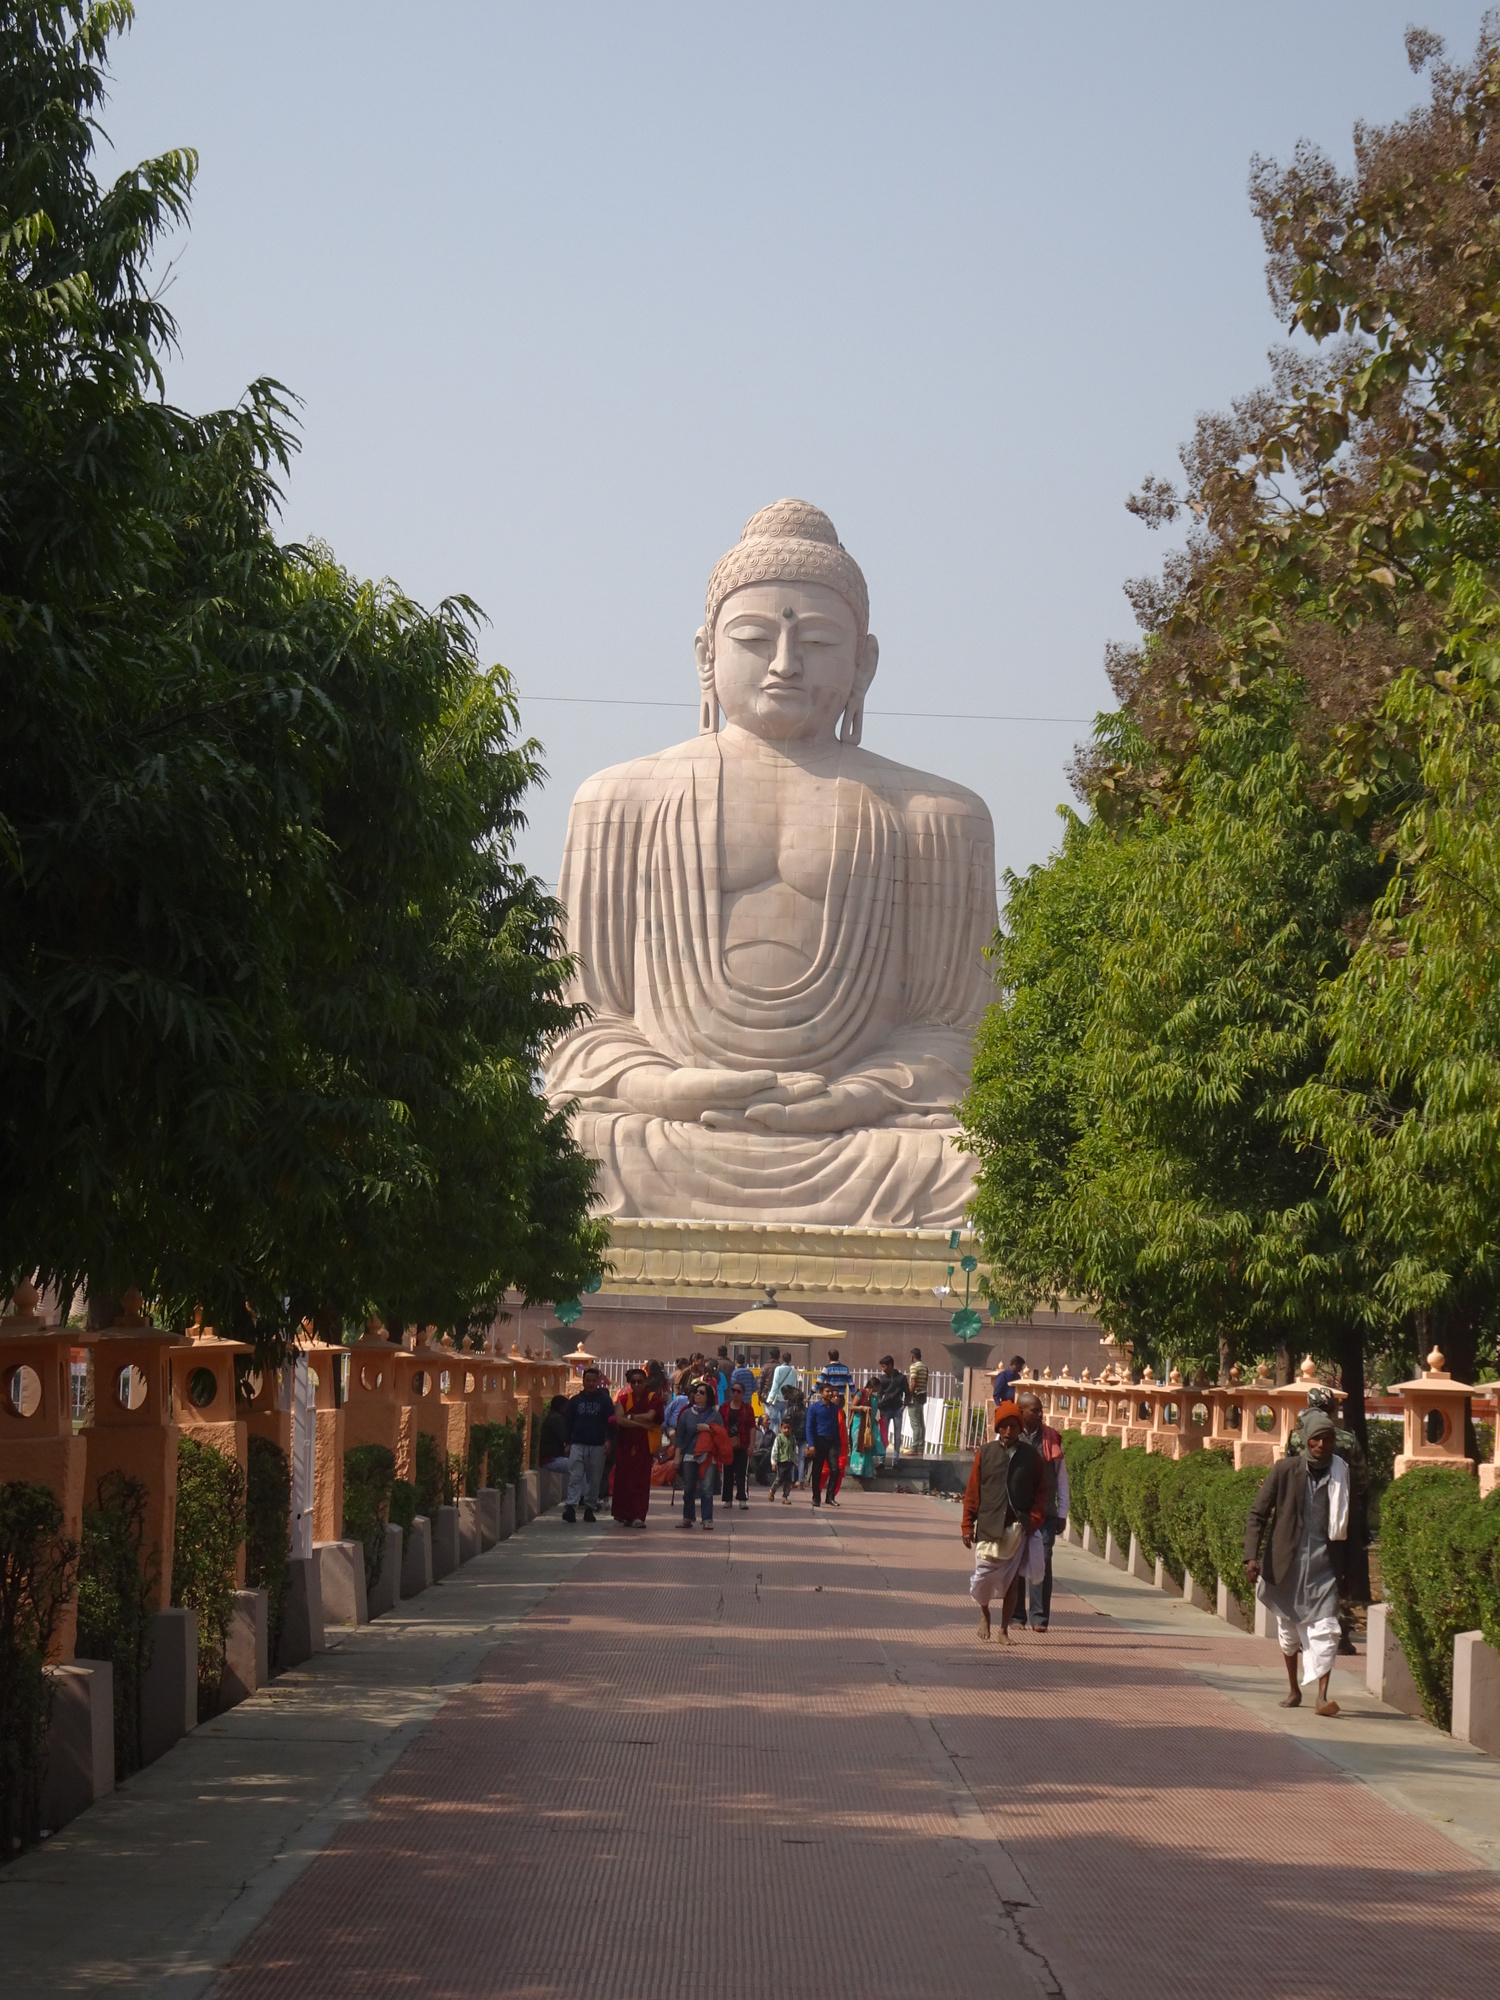 Bodh Gaya Great Buddha Statue 1 Bodh Gaya Pictures India In